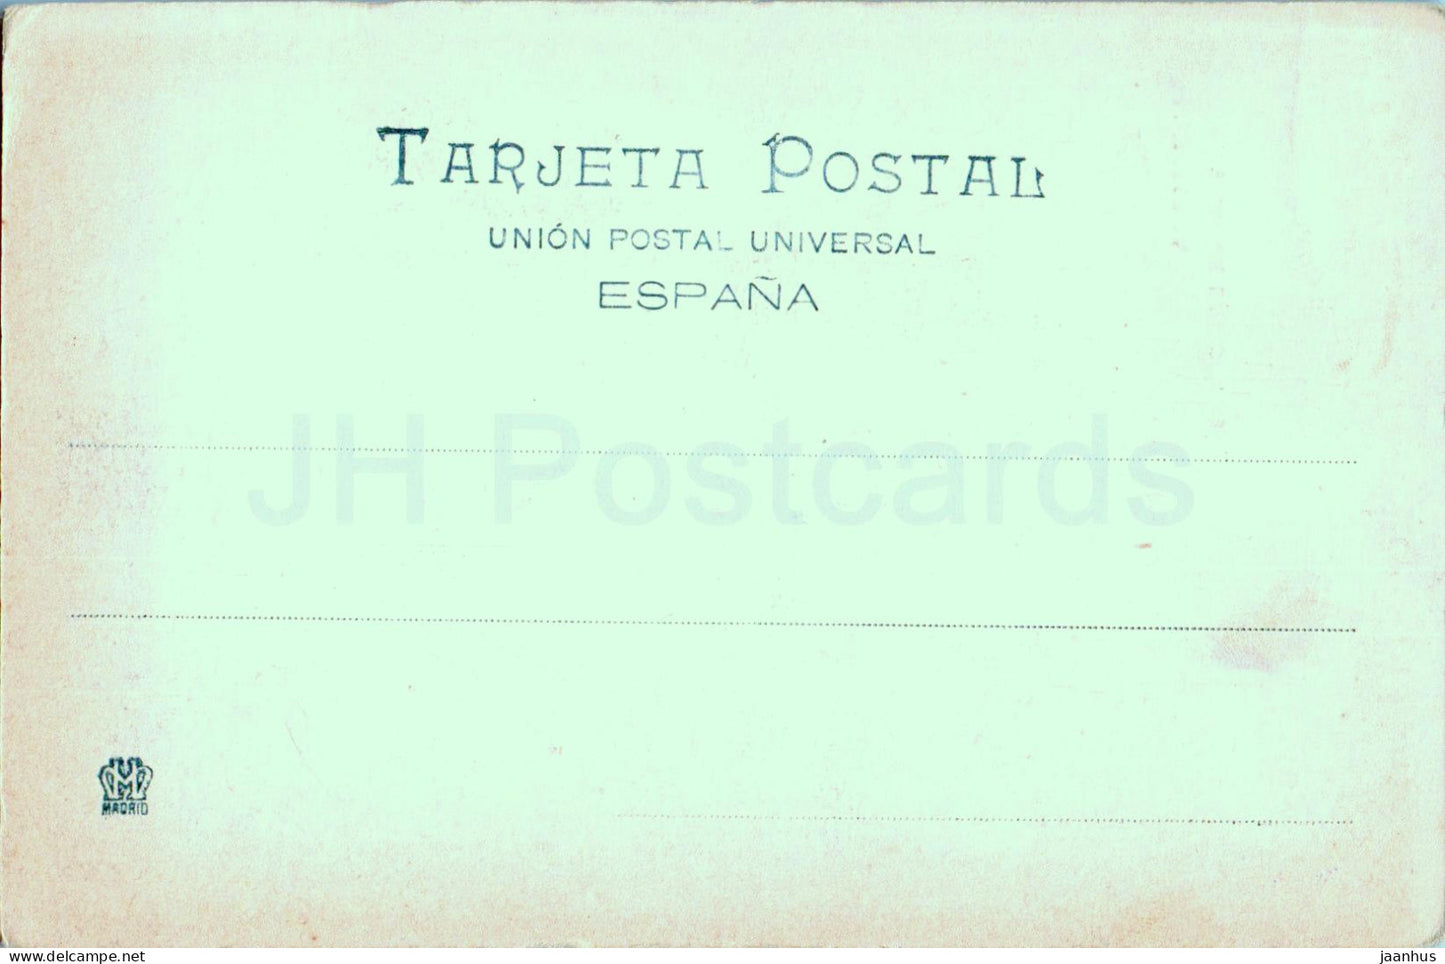 Alhambra - Sala de las Camas - alte Postkarte - 1913 - Spanien - unbenutzt 